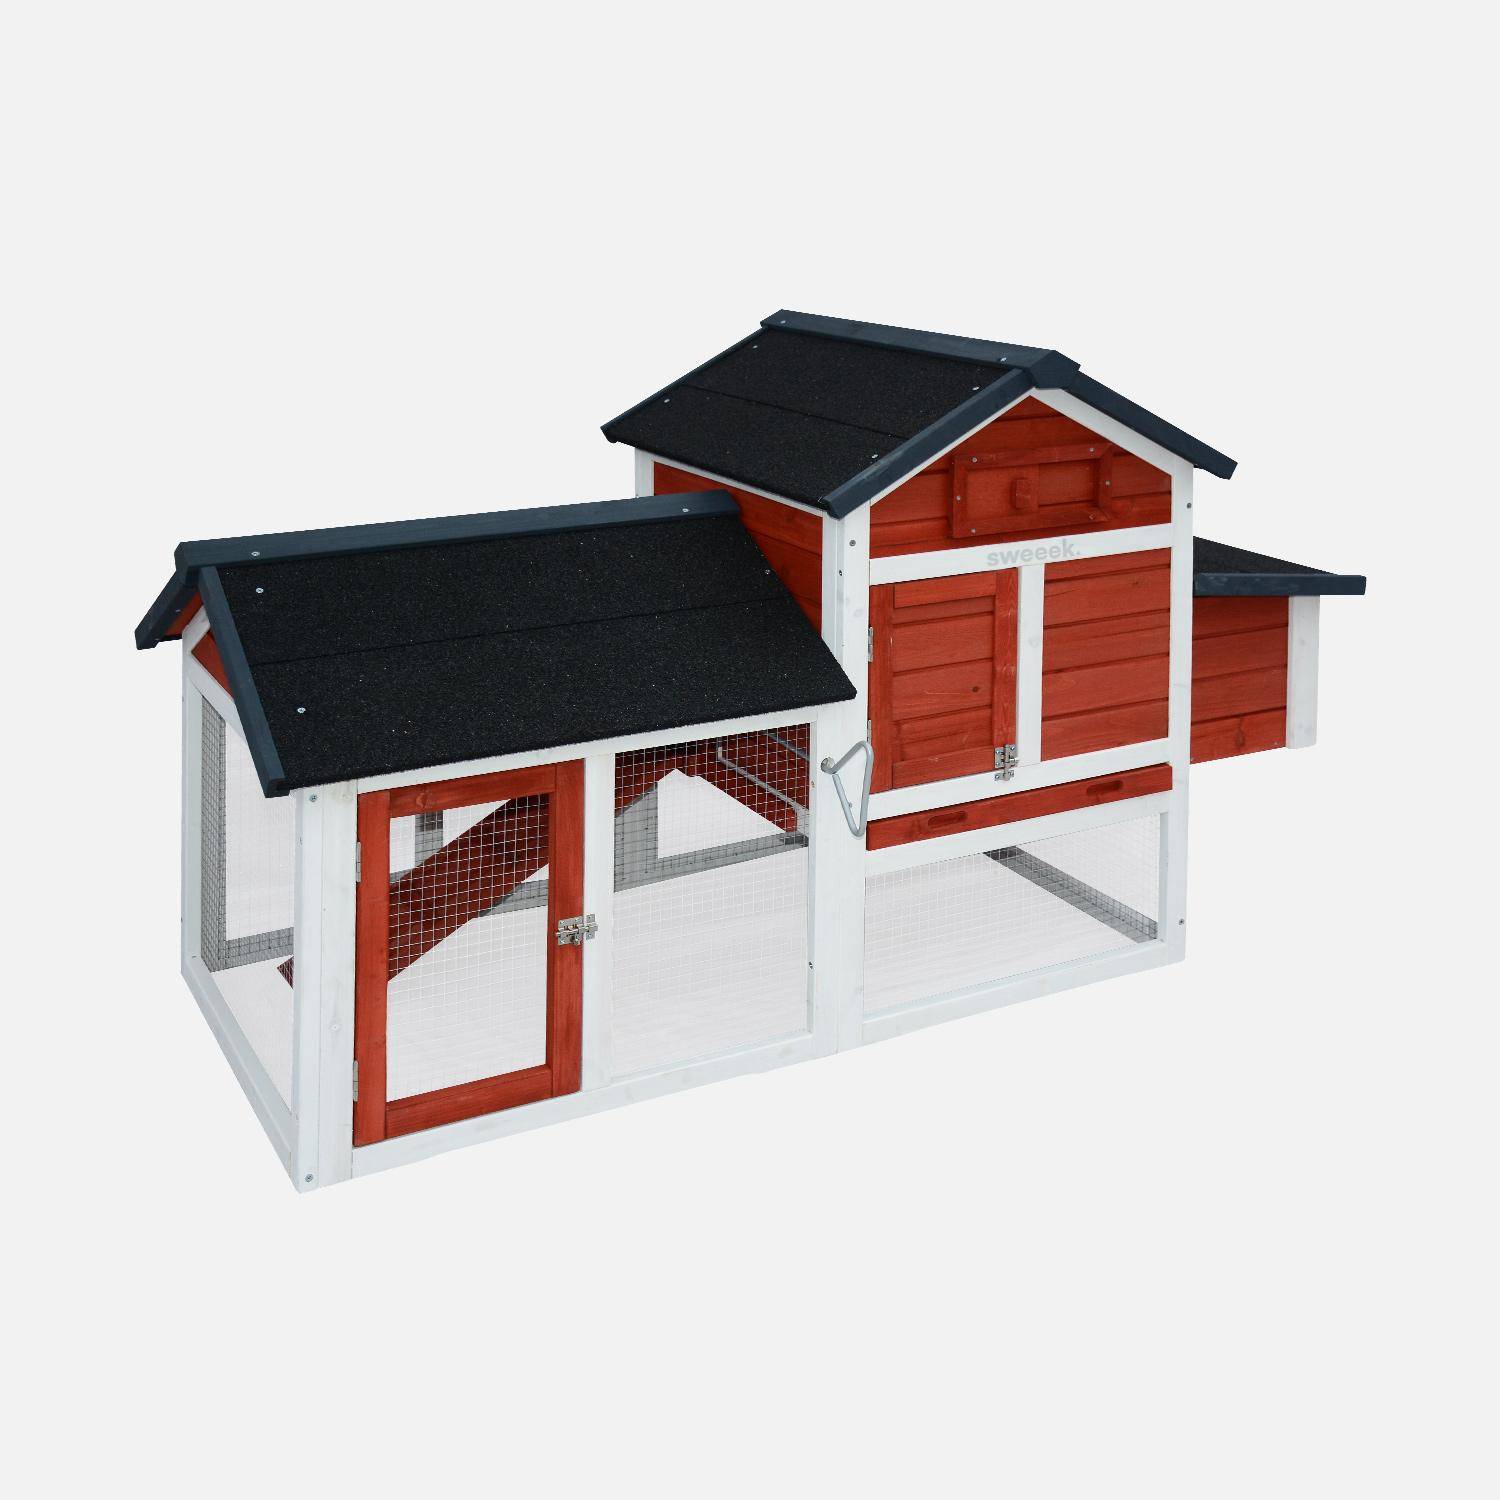 Wooden chicken coop - for 3 chickens, backyard hen cage, indoor and outdoor space - Galinette, Red,sweeek,Photo1